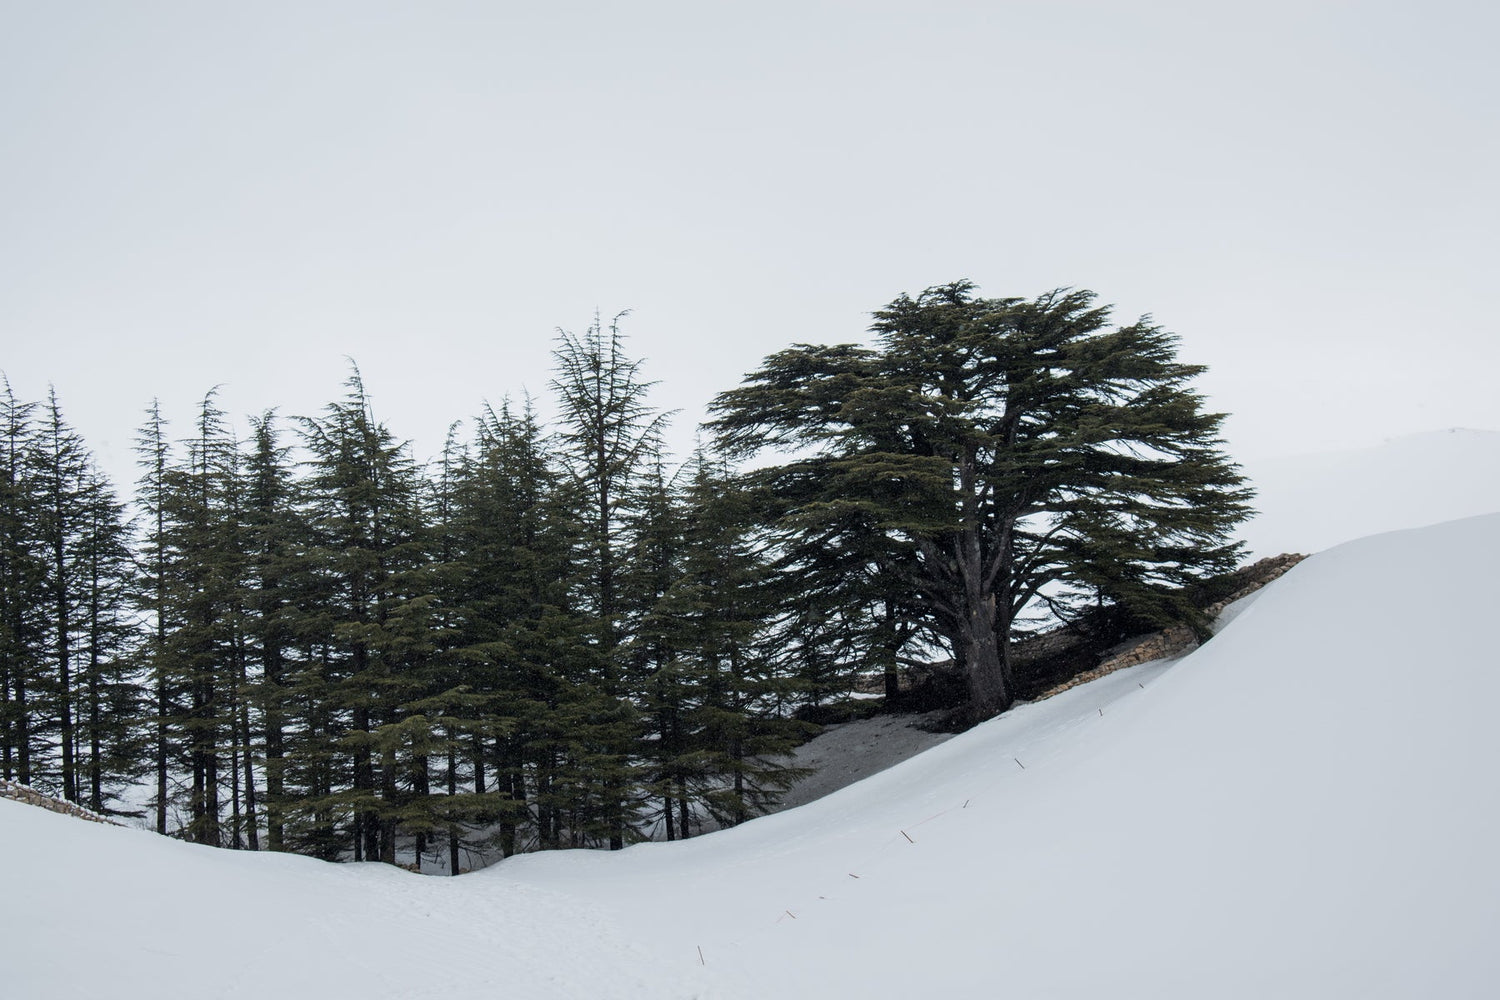 Arez Mountains, Lebanon, Skiing, Snowboarding, Snow Trekking, Winter Sports, Lebanese Hospitality, Lebanese Cuisine, Outdoor Adventure, Landscape Photography, Snowy Scenes.